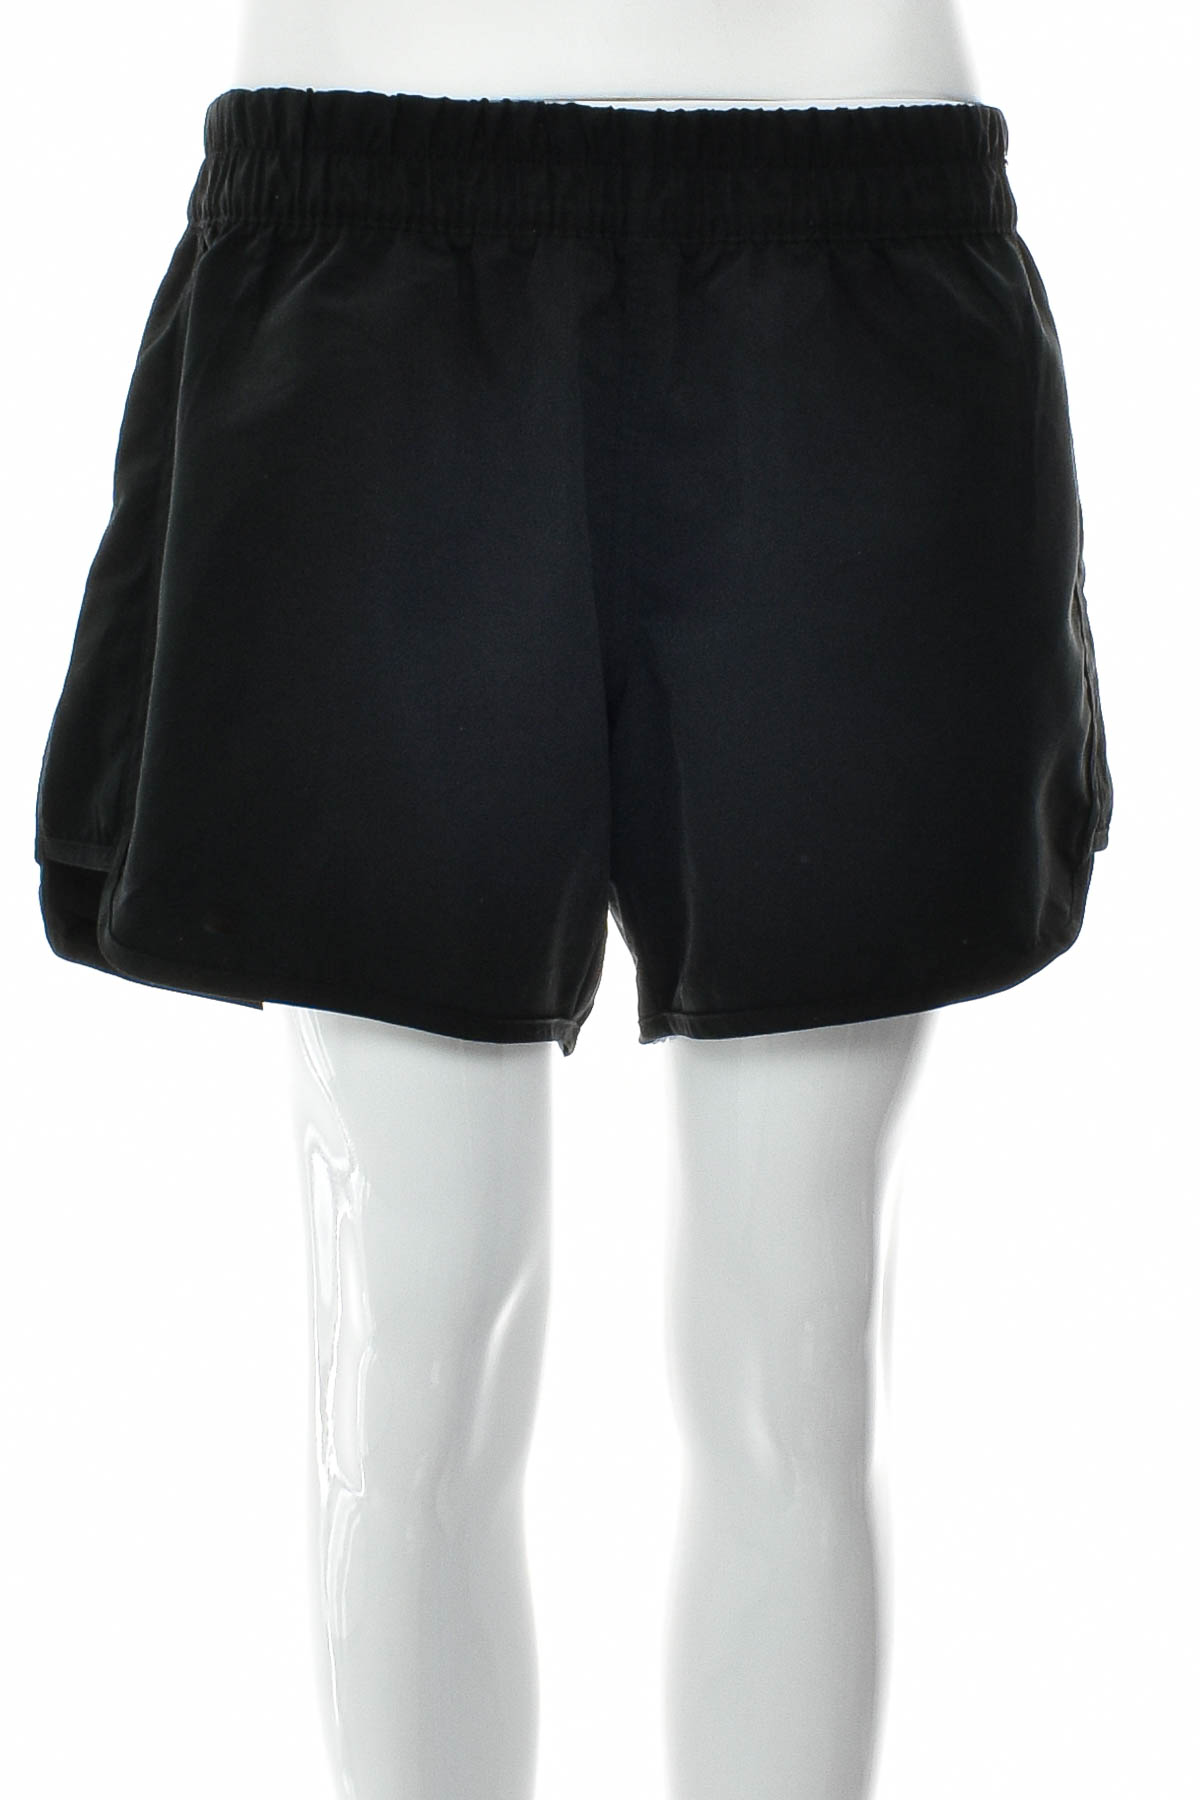 Women's shorts - Lascana - 0